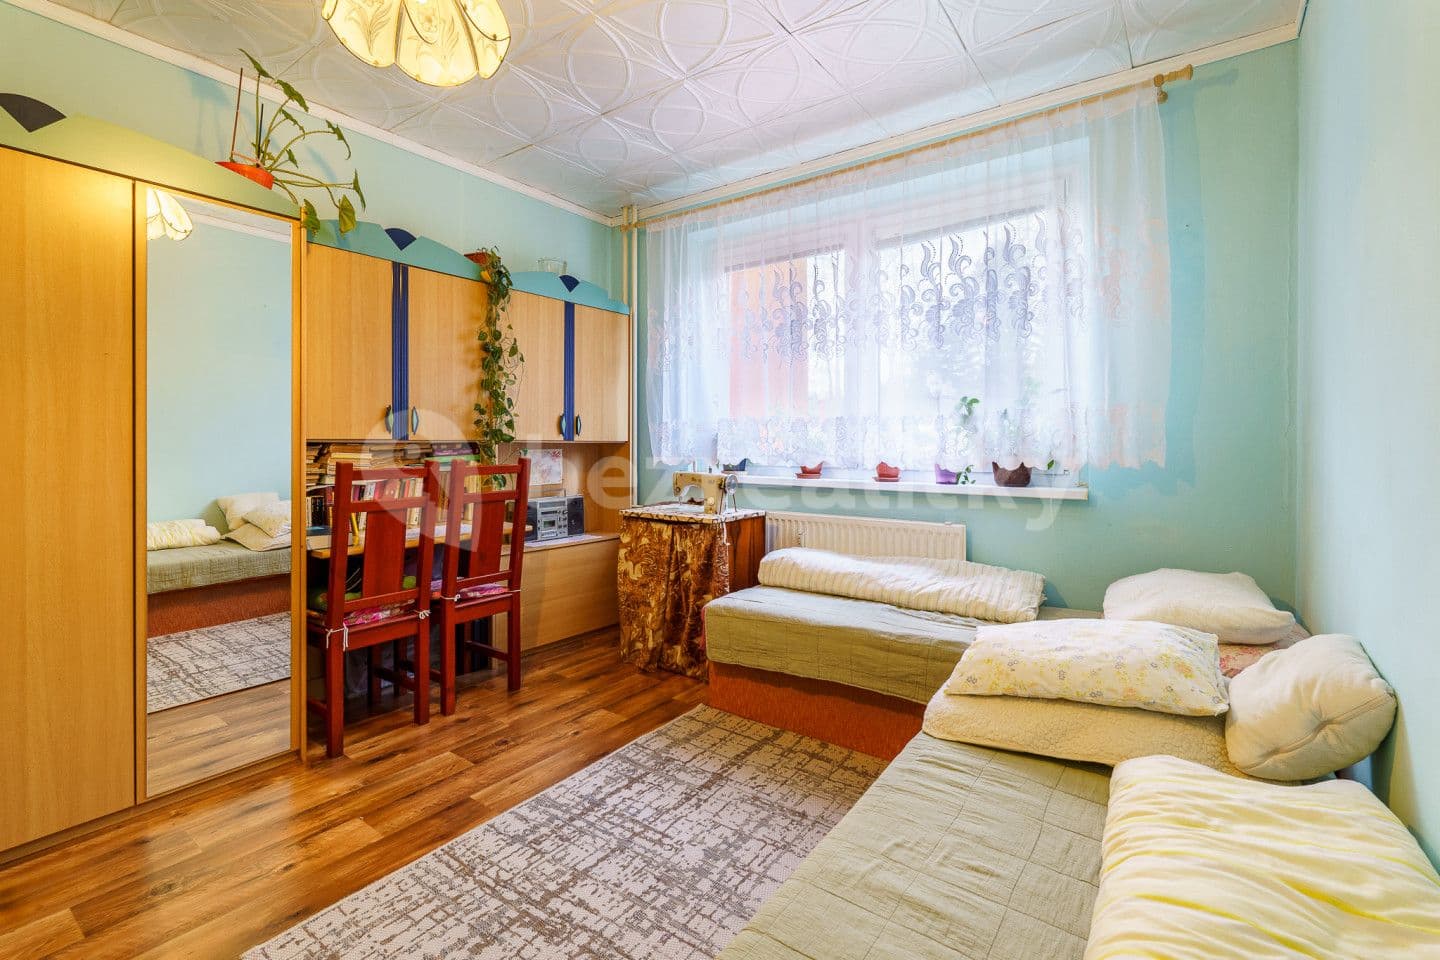 3 bedroom flat for sale, 68 m², Okružní, Klášterec nad Ohří, Ústecký Region